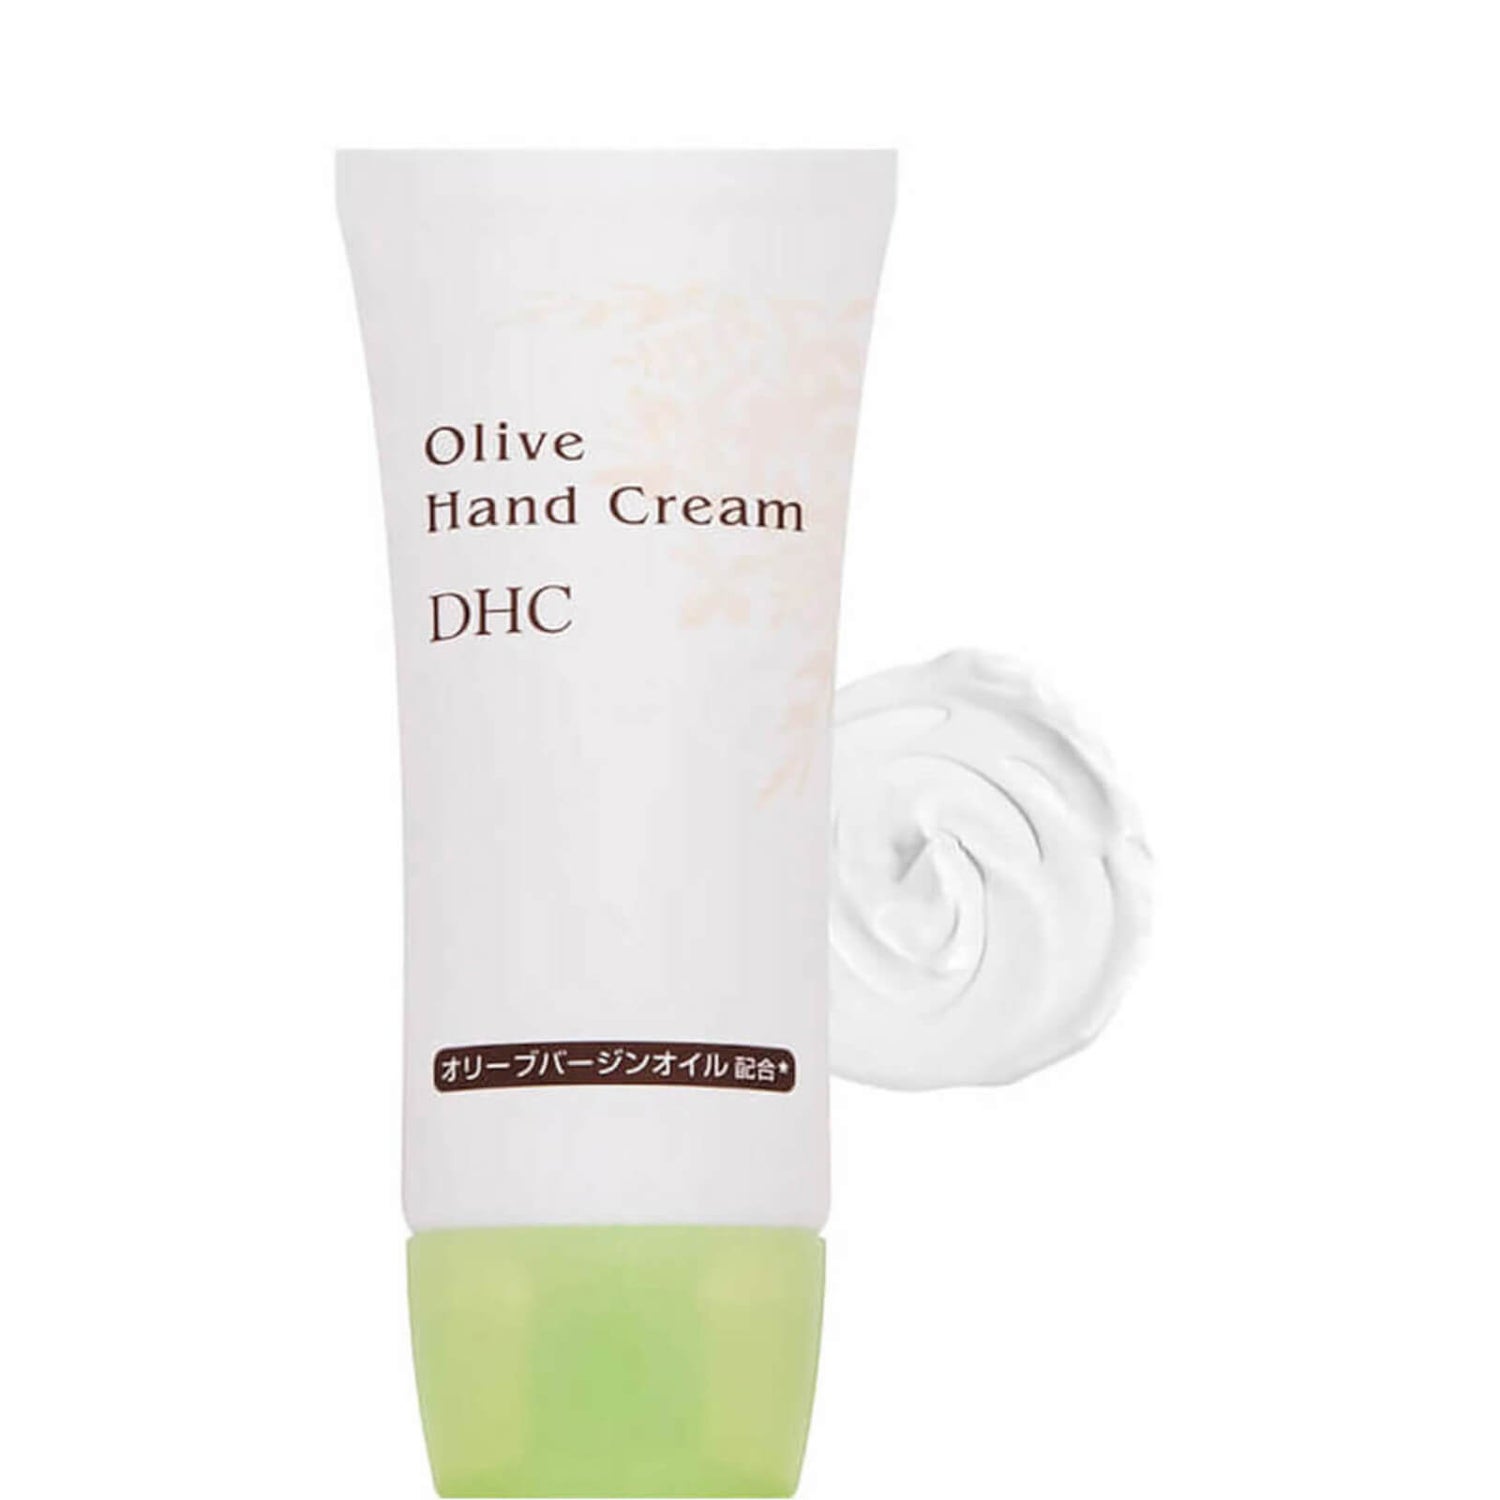 DHC Olive Hand Cream (1.9 oz.)